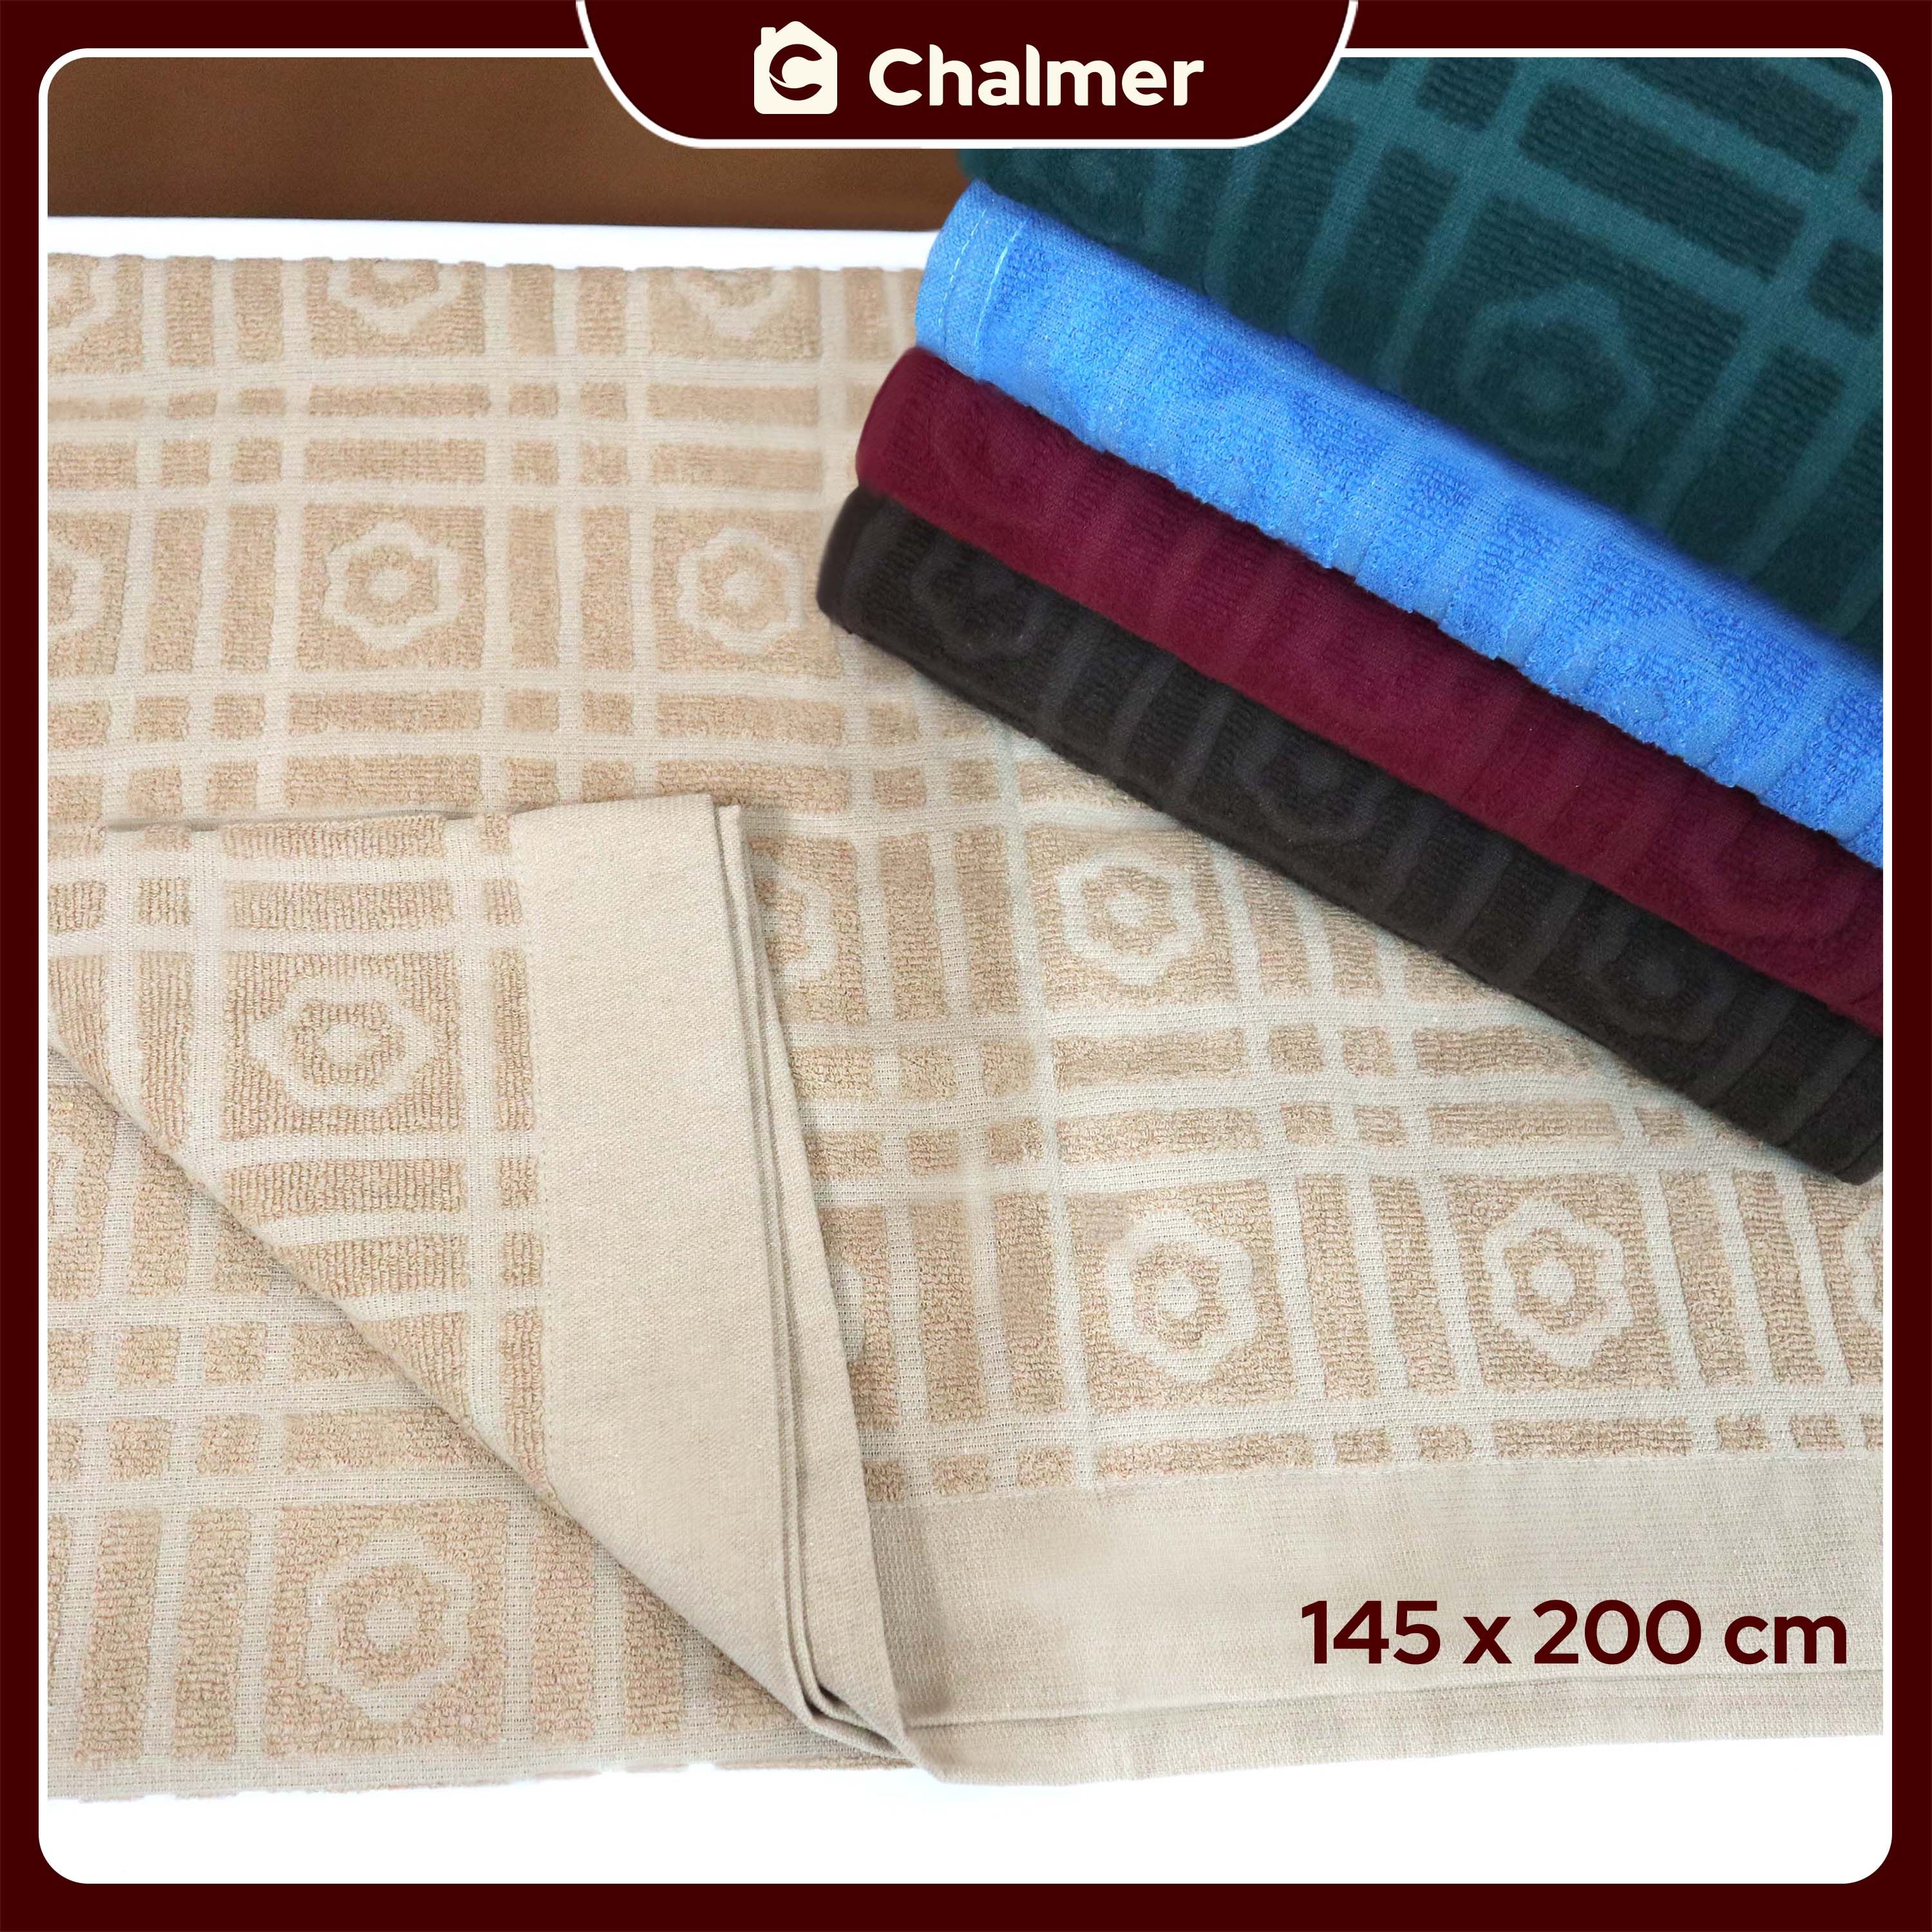 Selimut Katun Chalmer Ukuran 145x200 cm Terry Cloth Towel Blanket - Maroon - 5